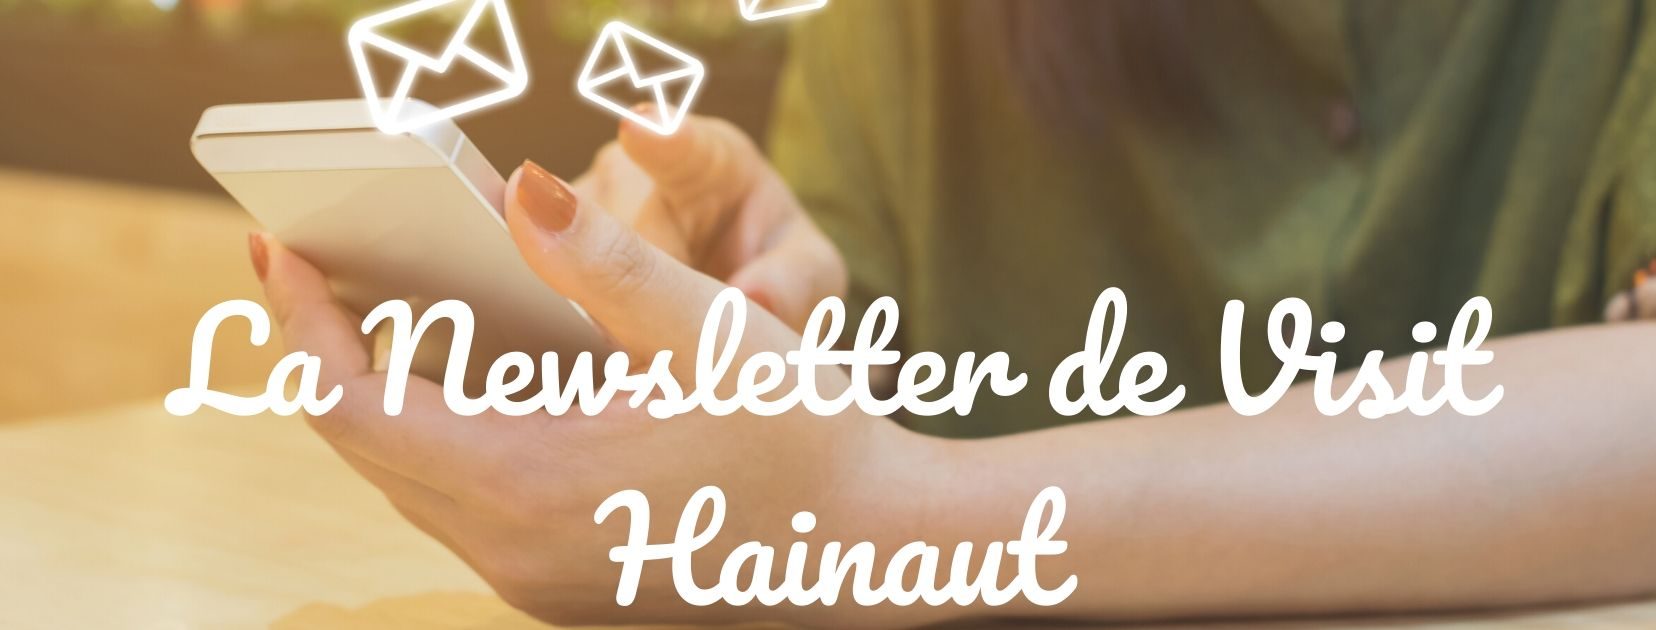 Newsletter Visit Hainaut